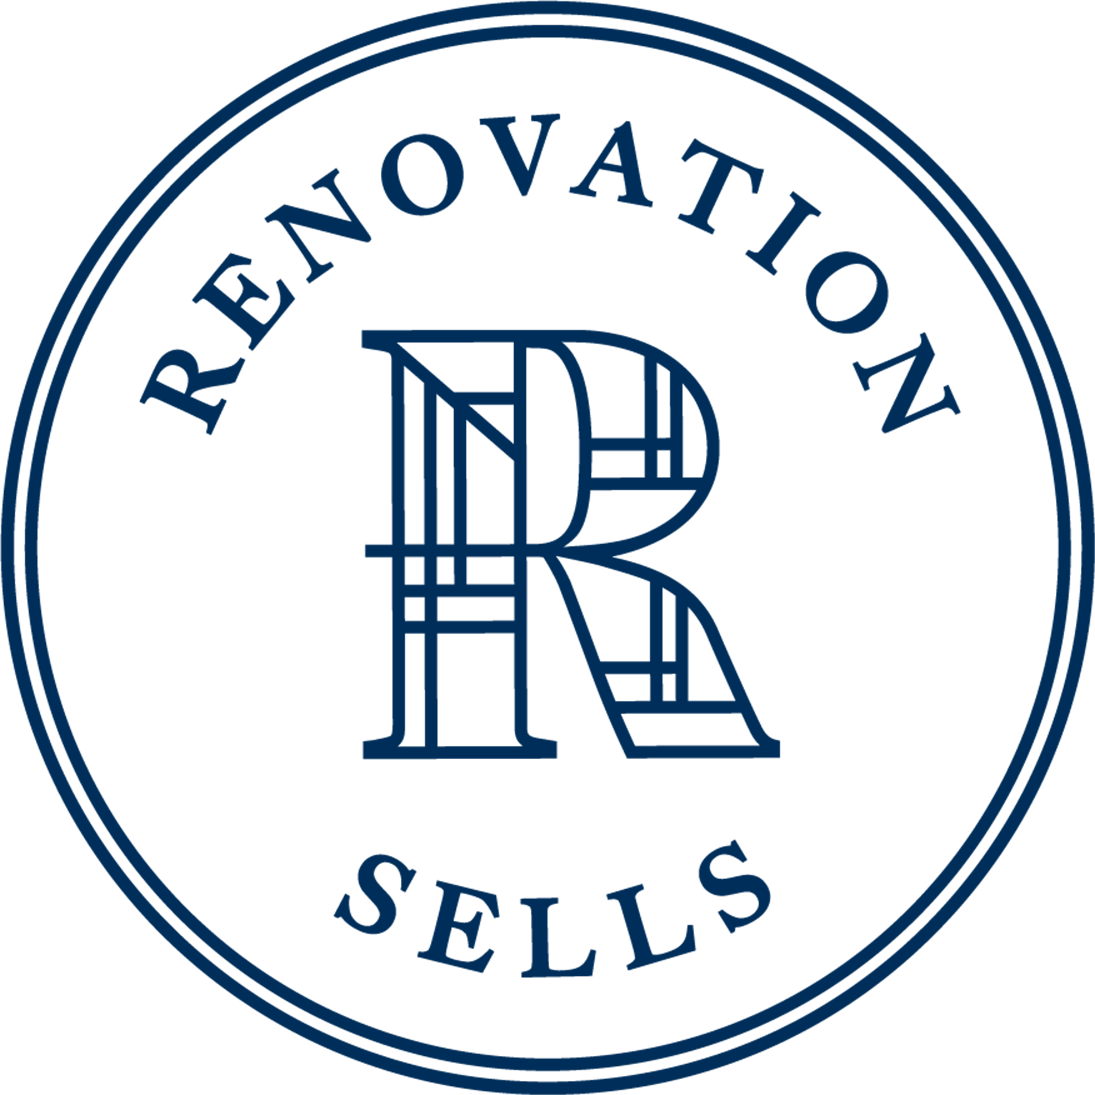 Renovation Sells Logo